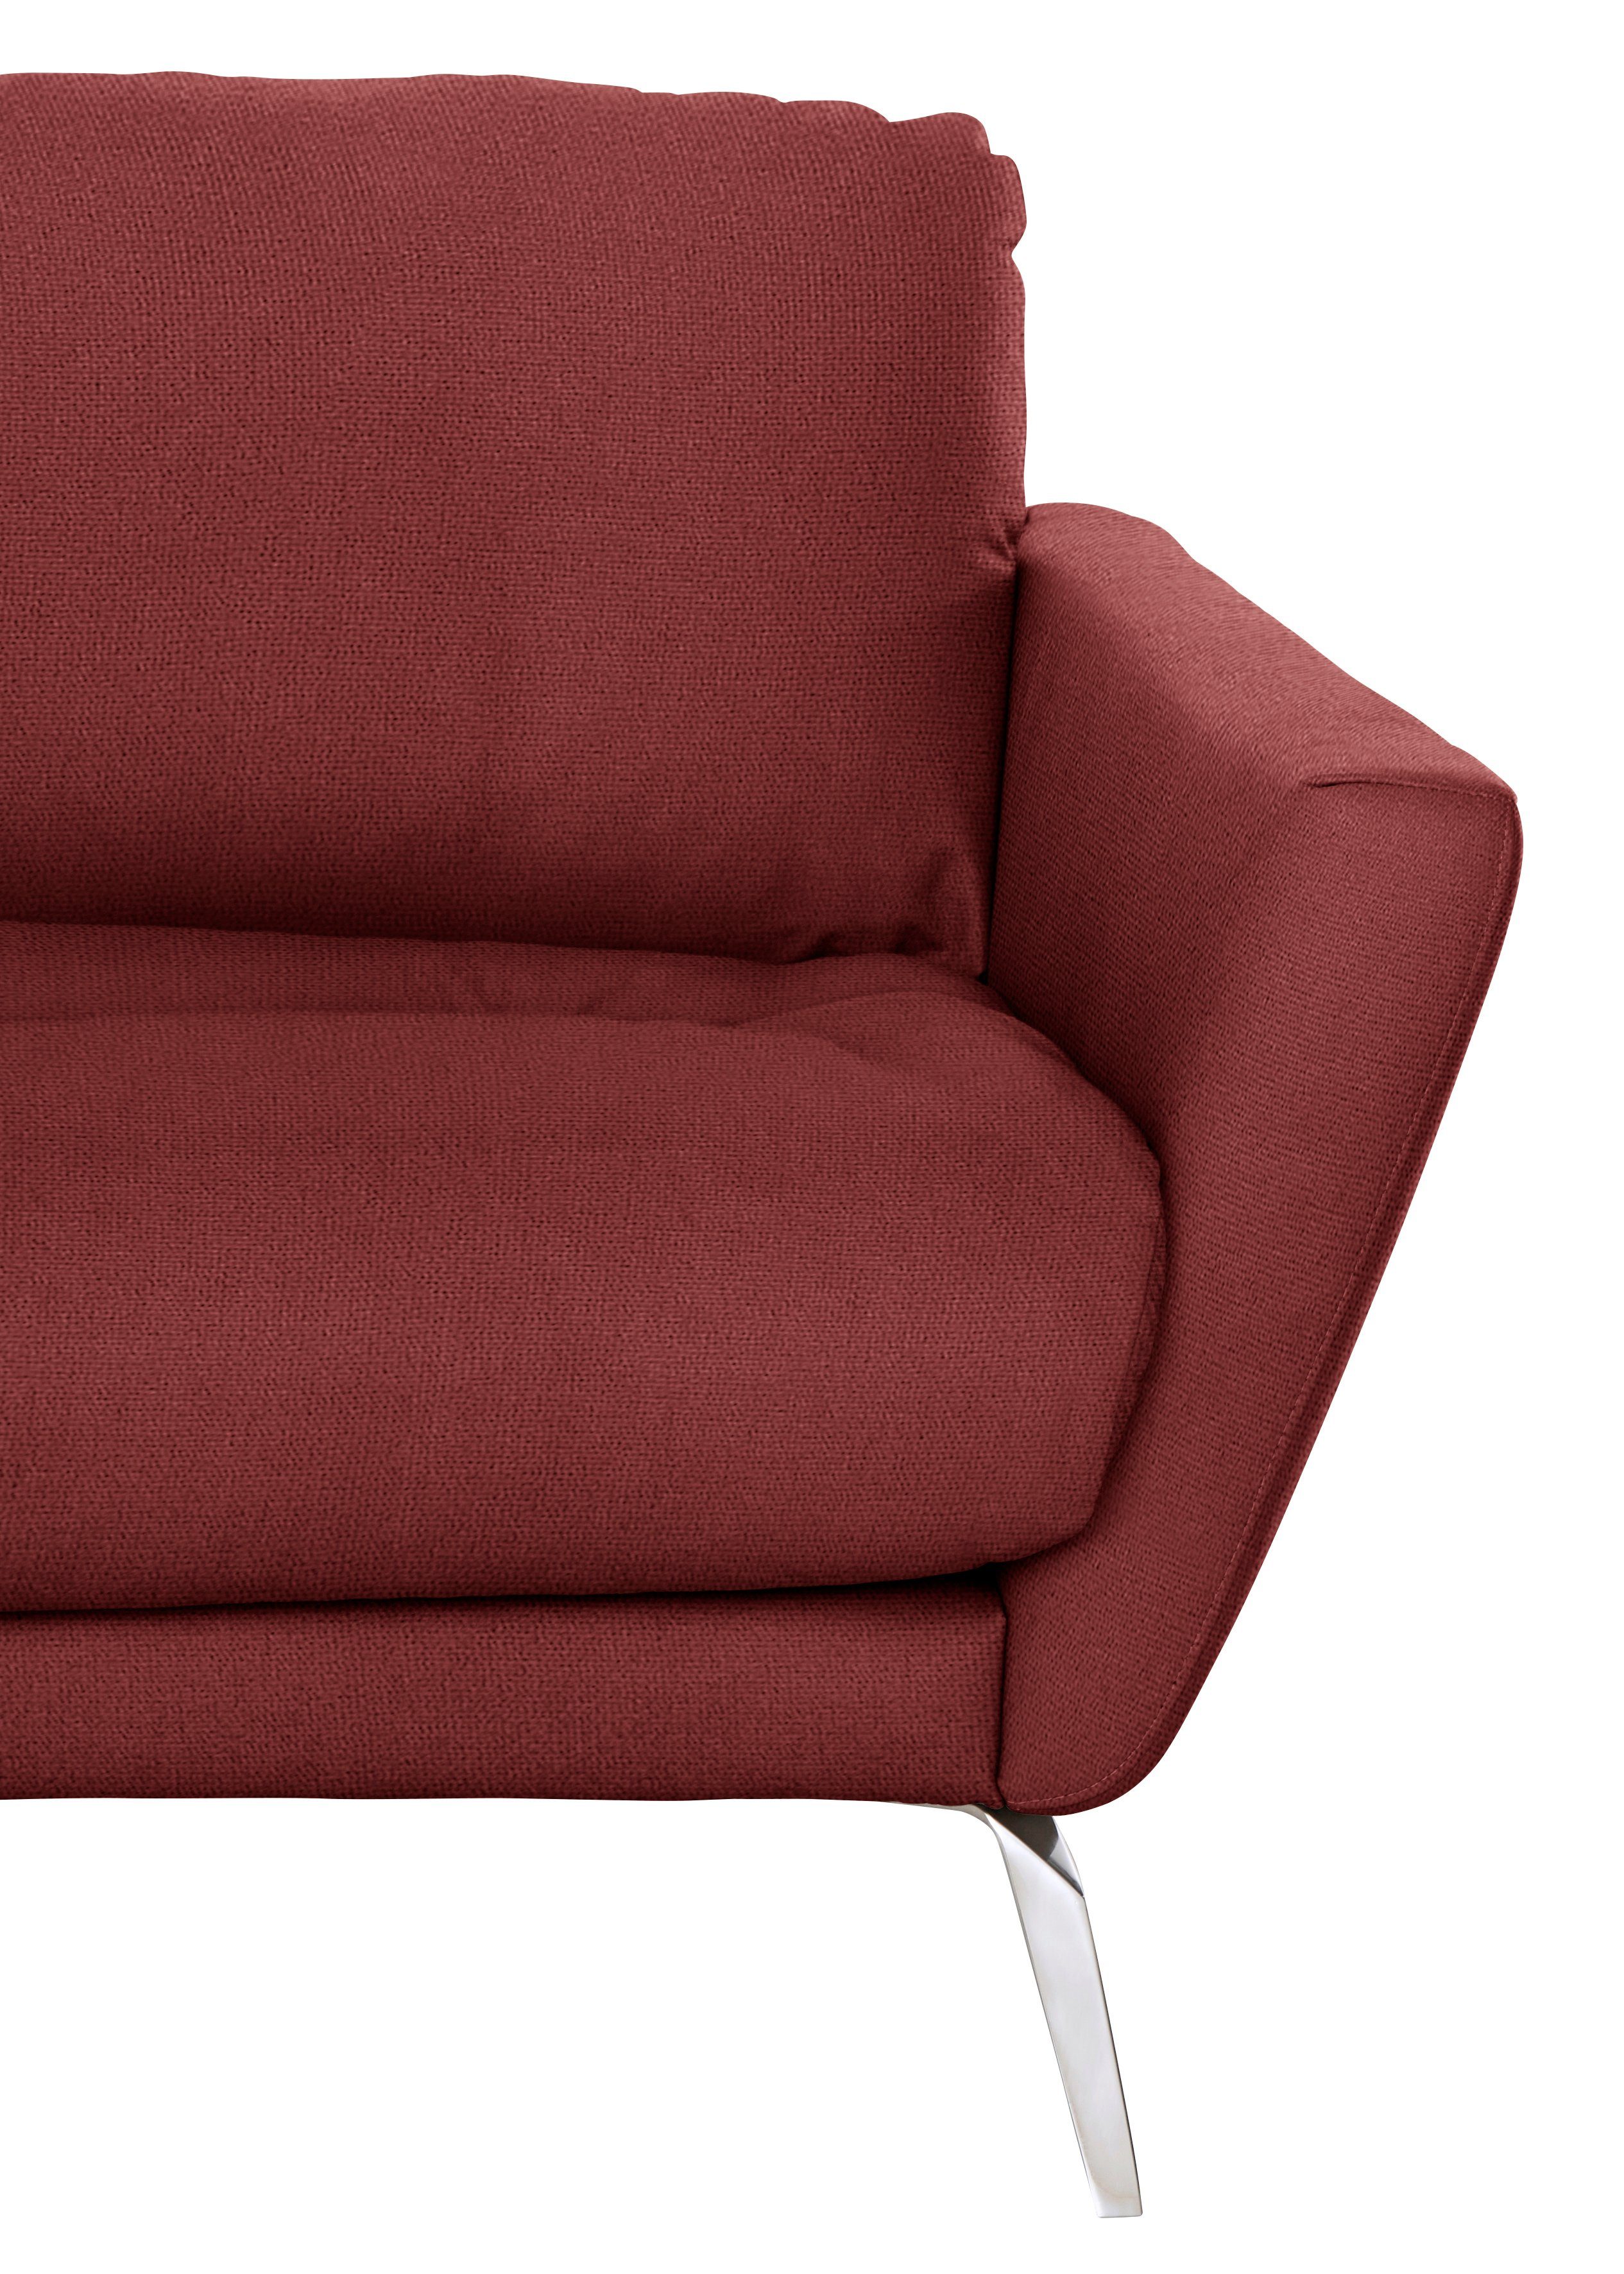 W.SCHILLIG Big-Sofa softy, mit Chrom Sitz, im Heftung dekorativer Füße glänzend